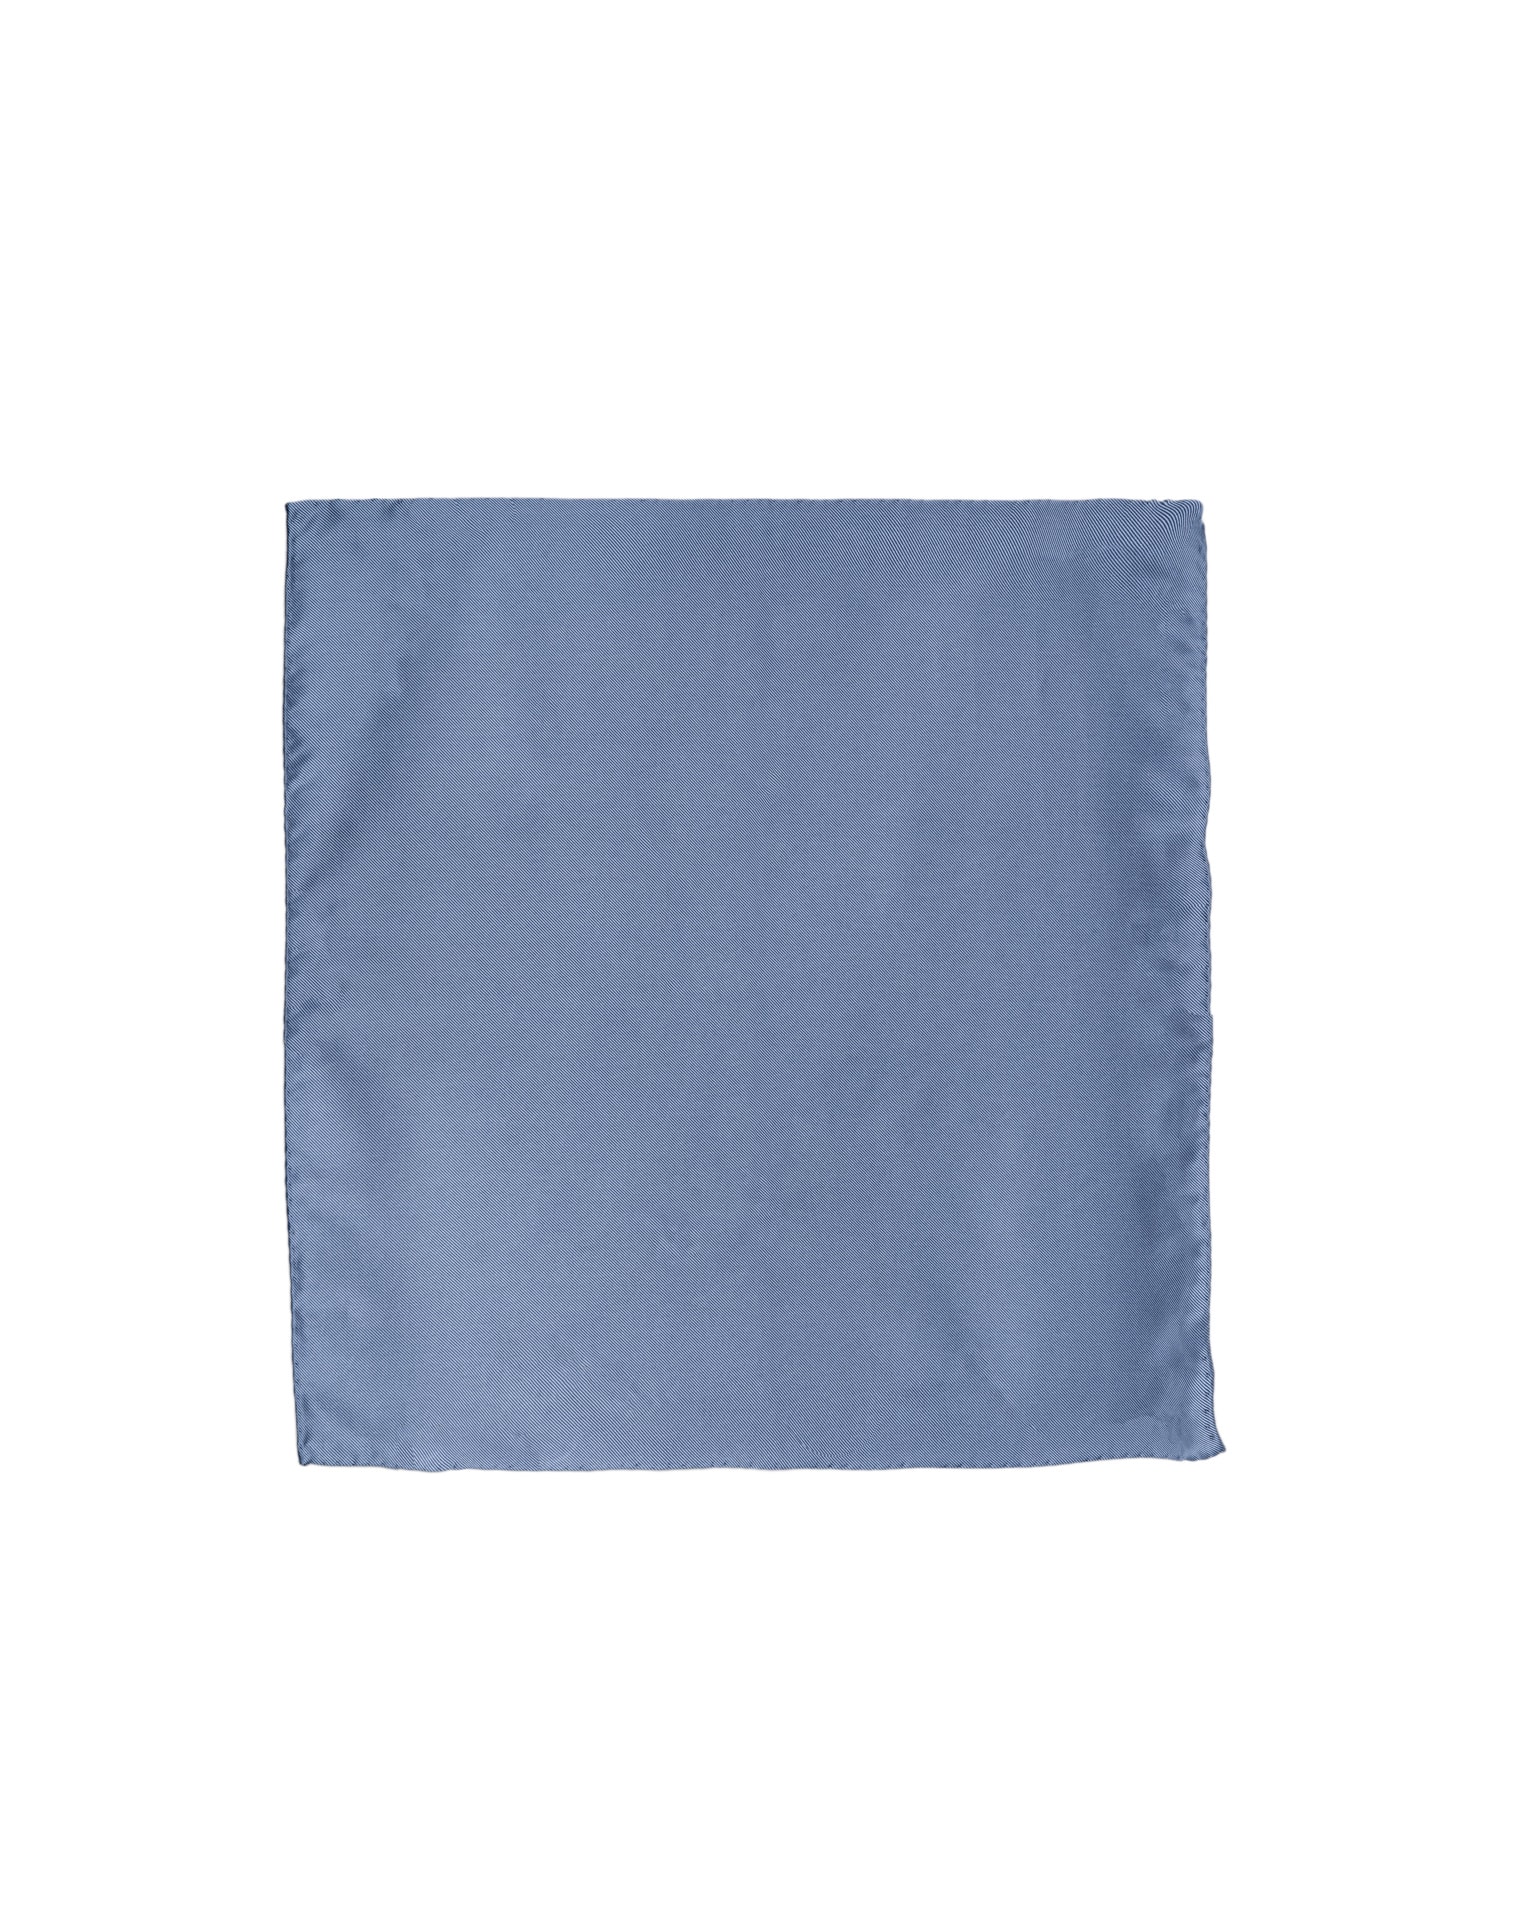 Emporio Armani Armani light blue pocket square